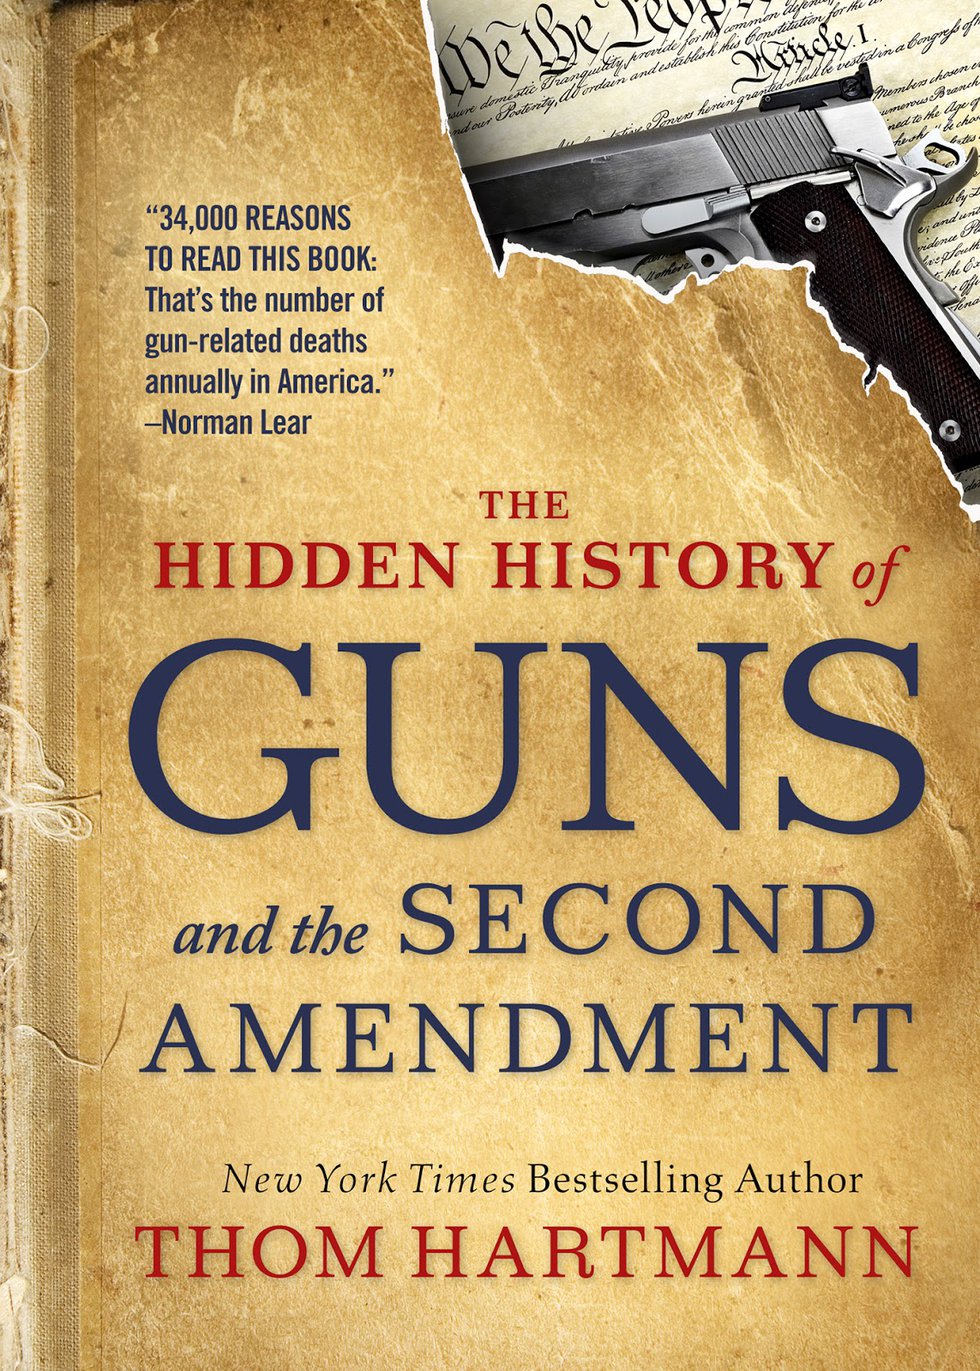 the twenty-second amendment